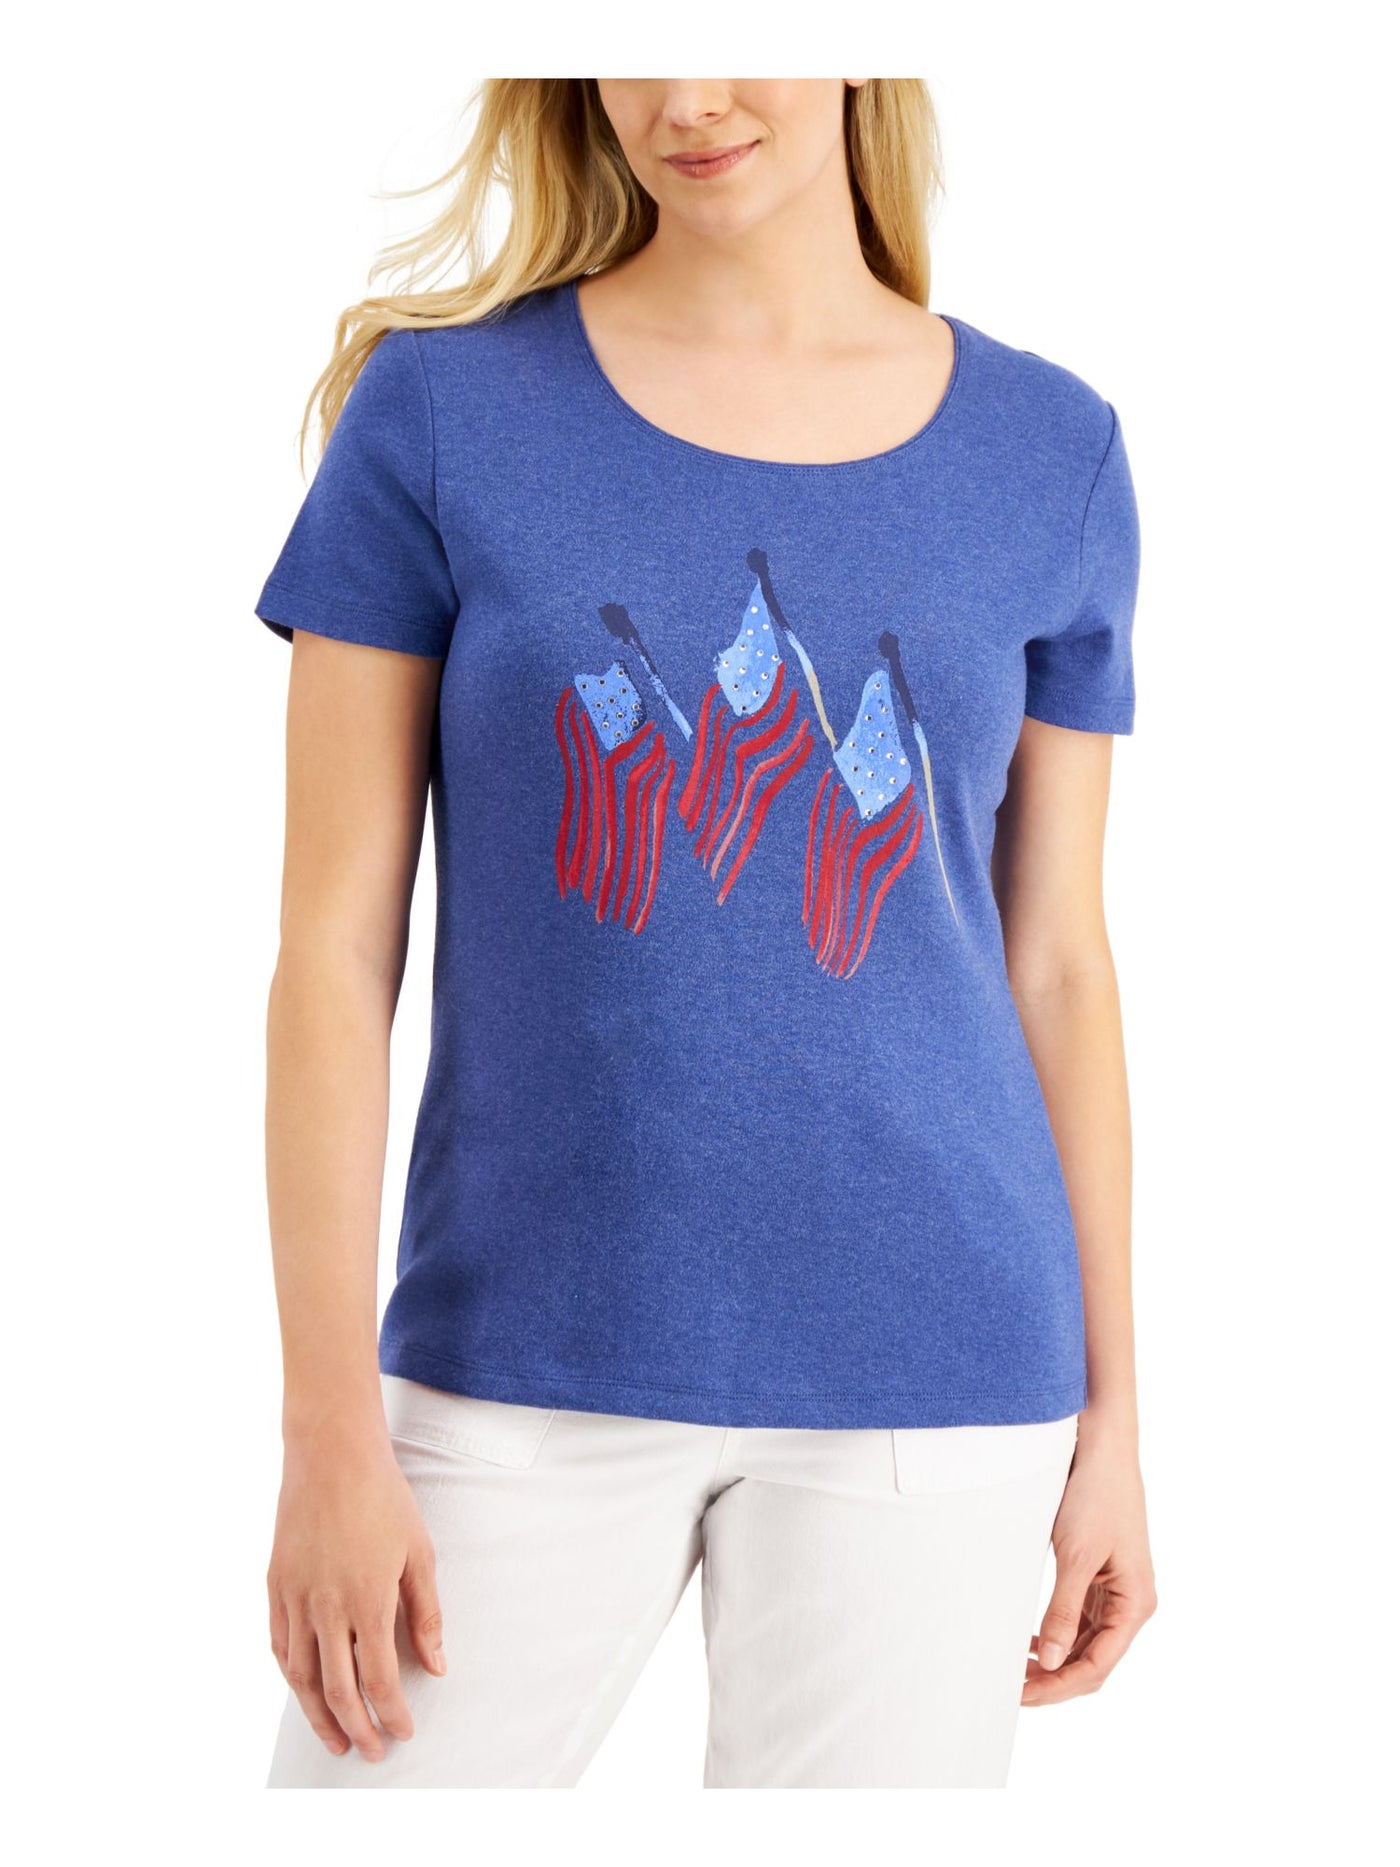 KAREN SCOTT Womens Blue Embellished Relaxed Fit Graphic Short Sleeve Scoop Neck T-Shirt M